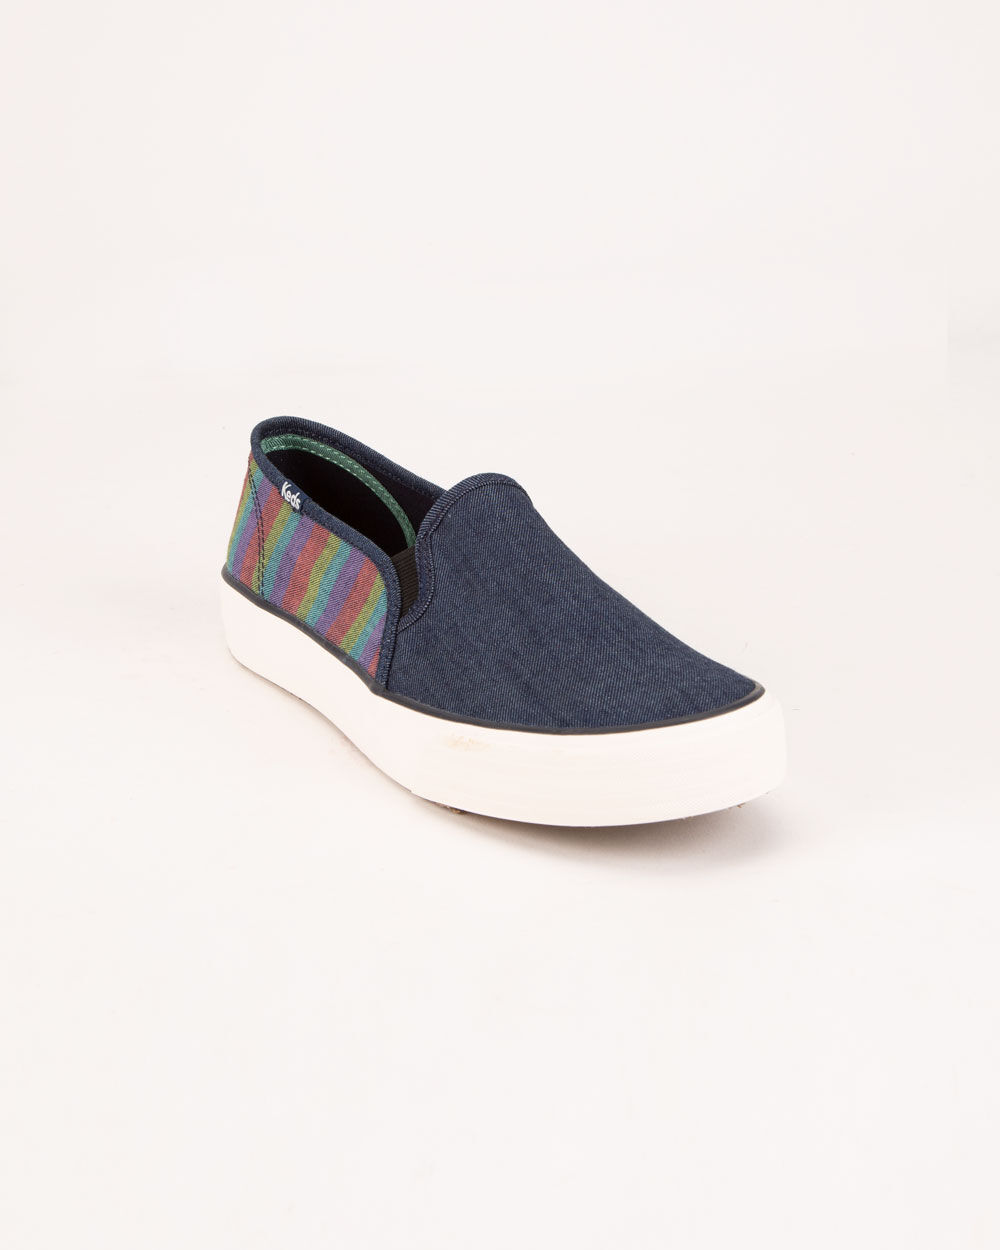 KEDS Double Decker Denim Rainbow Womens Shoes - NAVY COMBO | Tillys